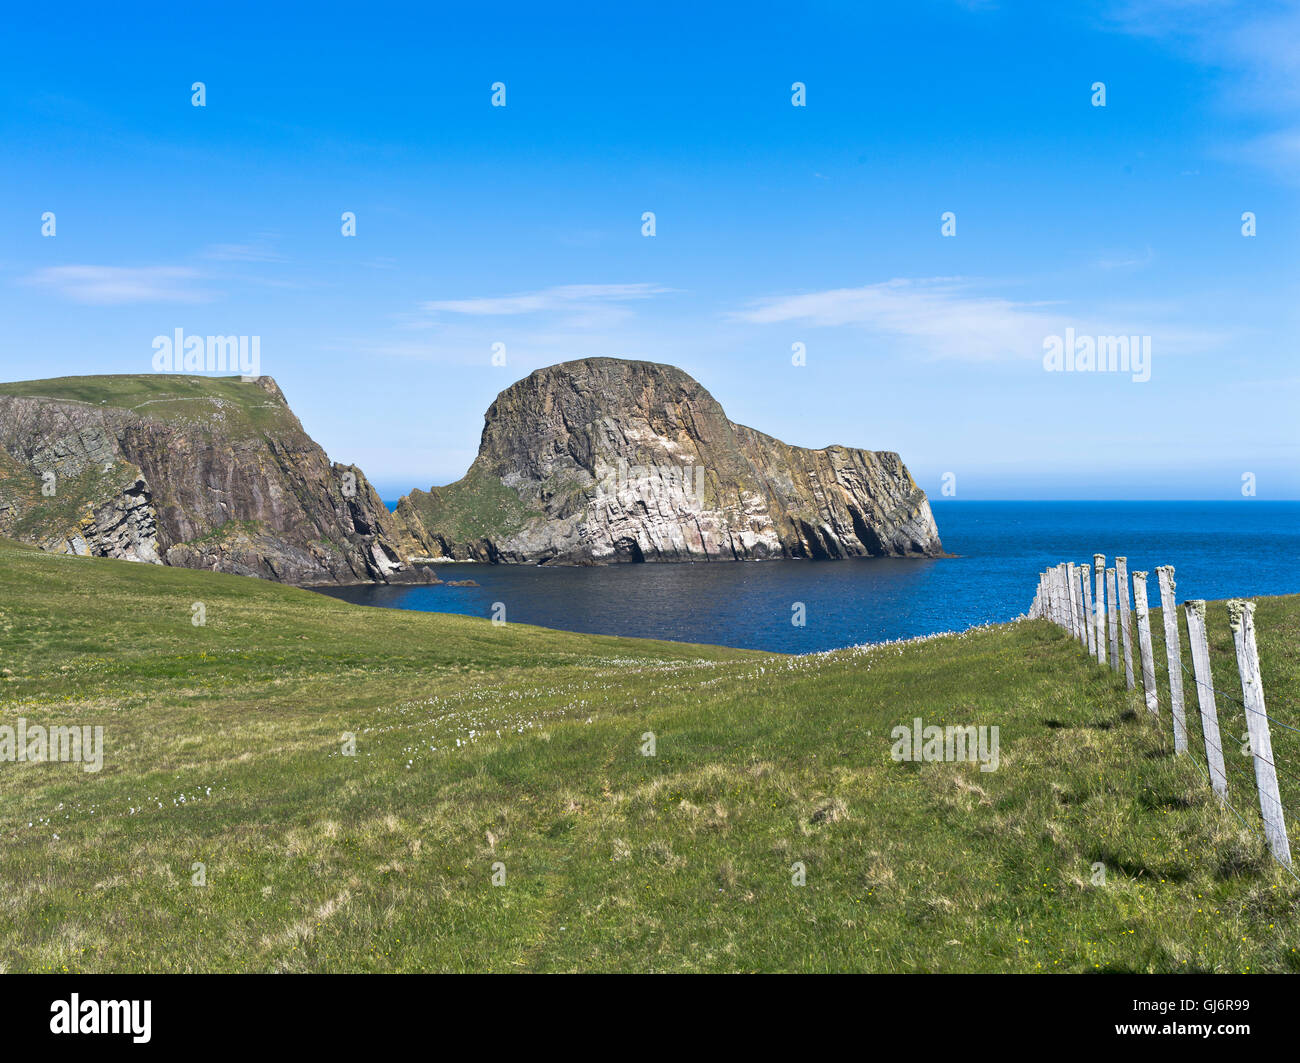 Dh ovejas Rock Fair Isle Shetland mar grande pila Heelors Vaasetter el Fideicomiso Nacional de Escocia paisaje Foto de stock